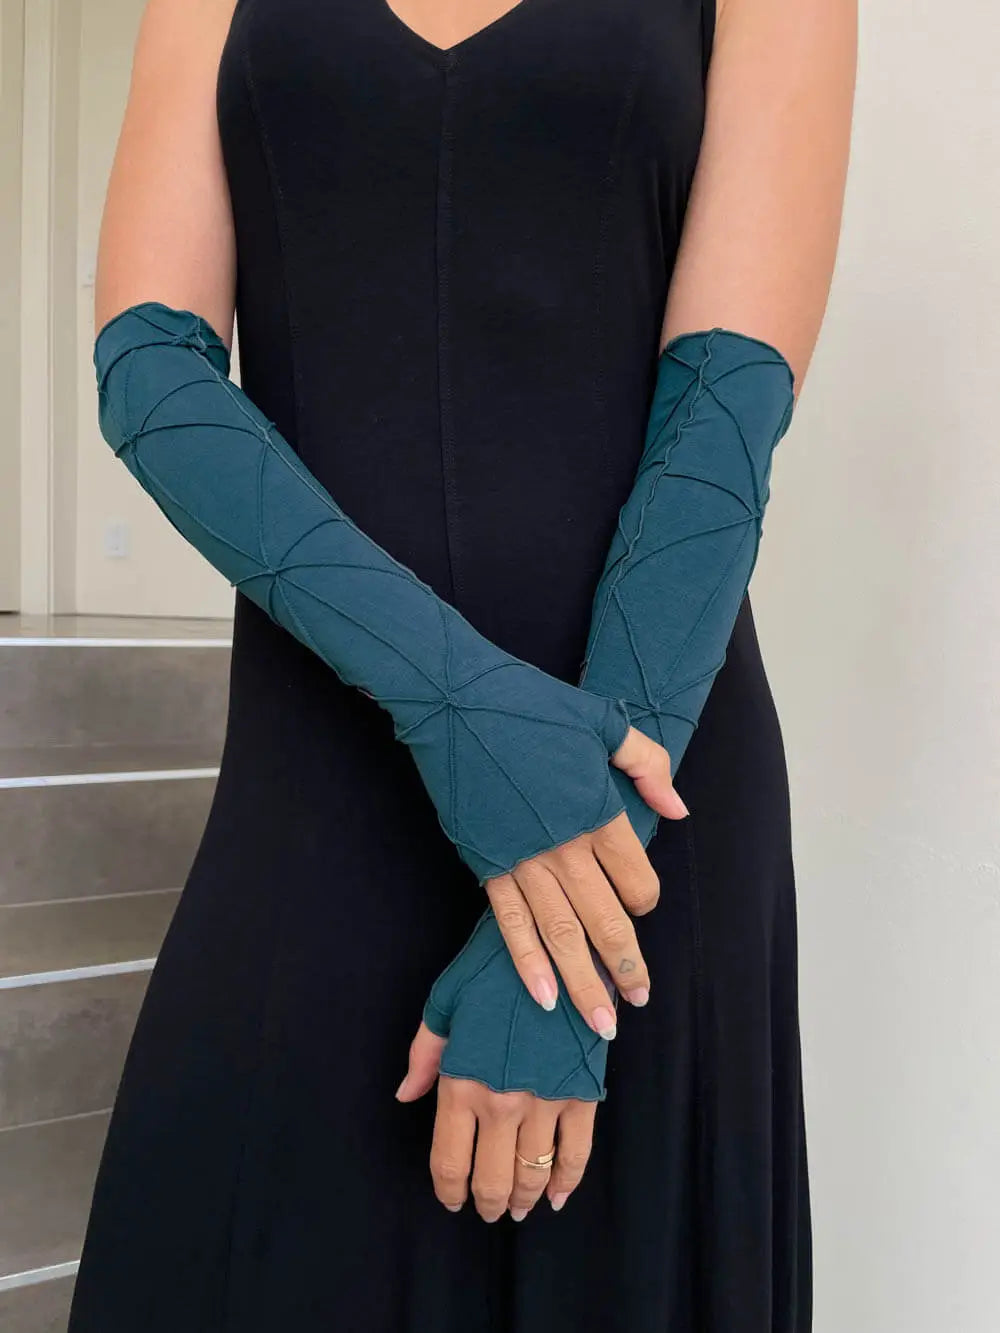 Texture Fingerless Gloves | Opera Length